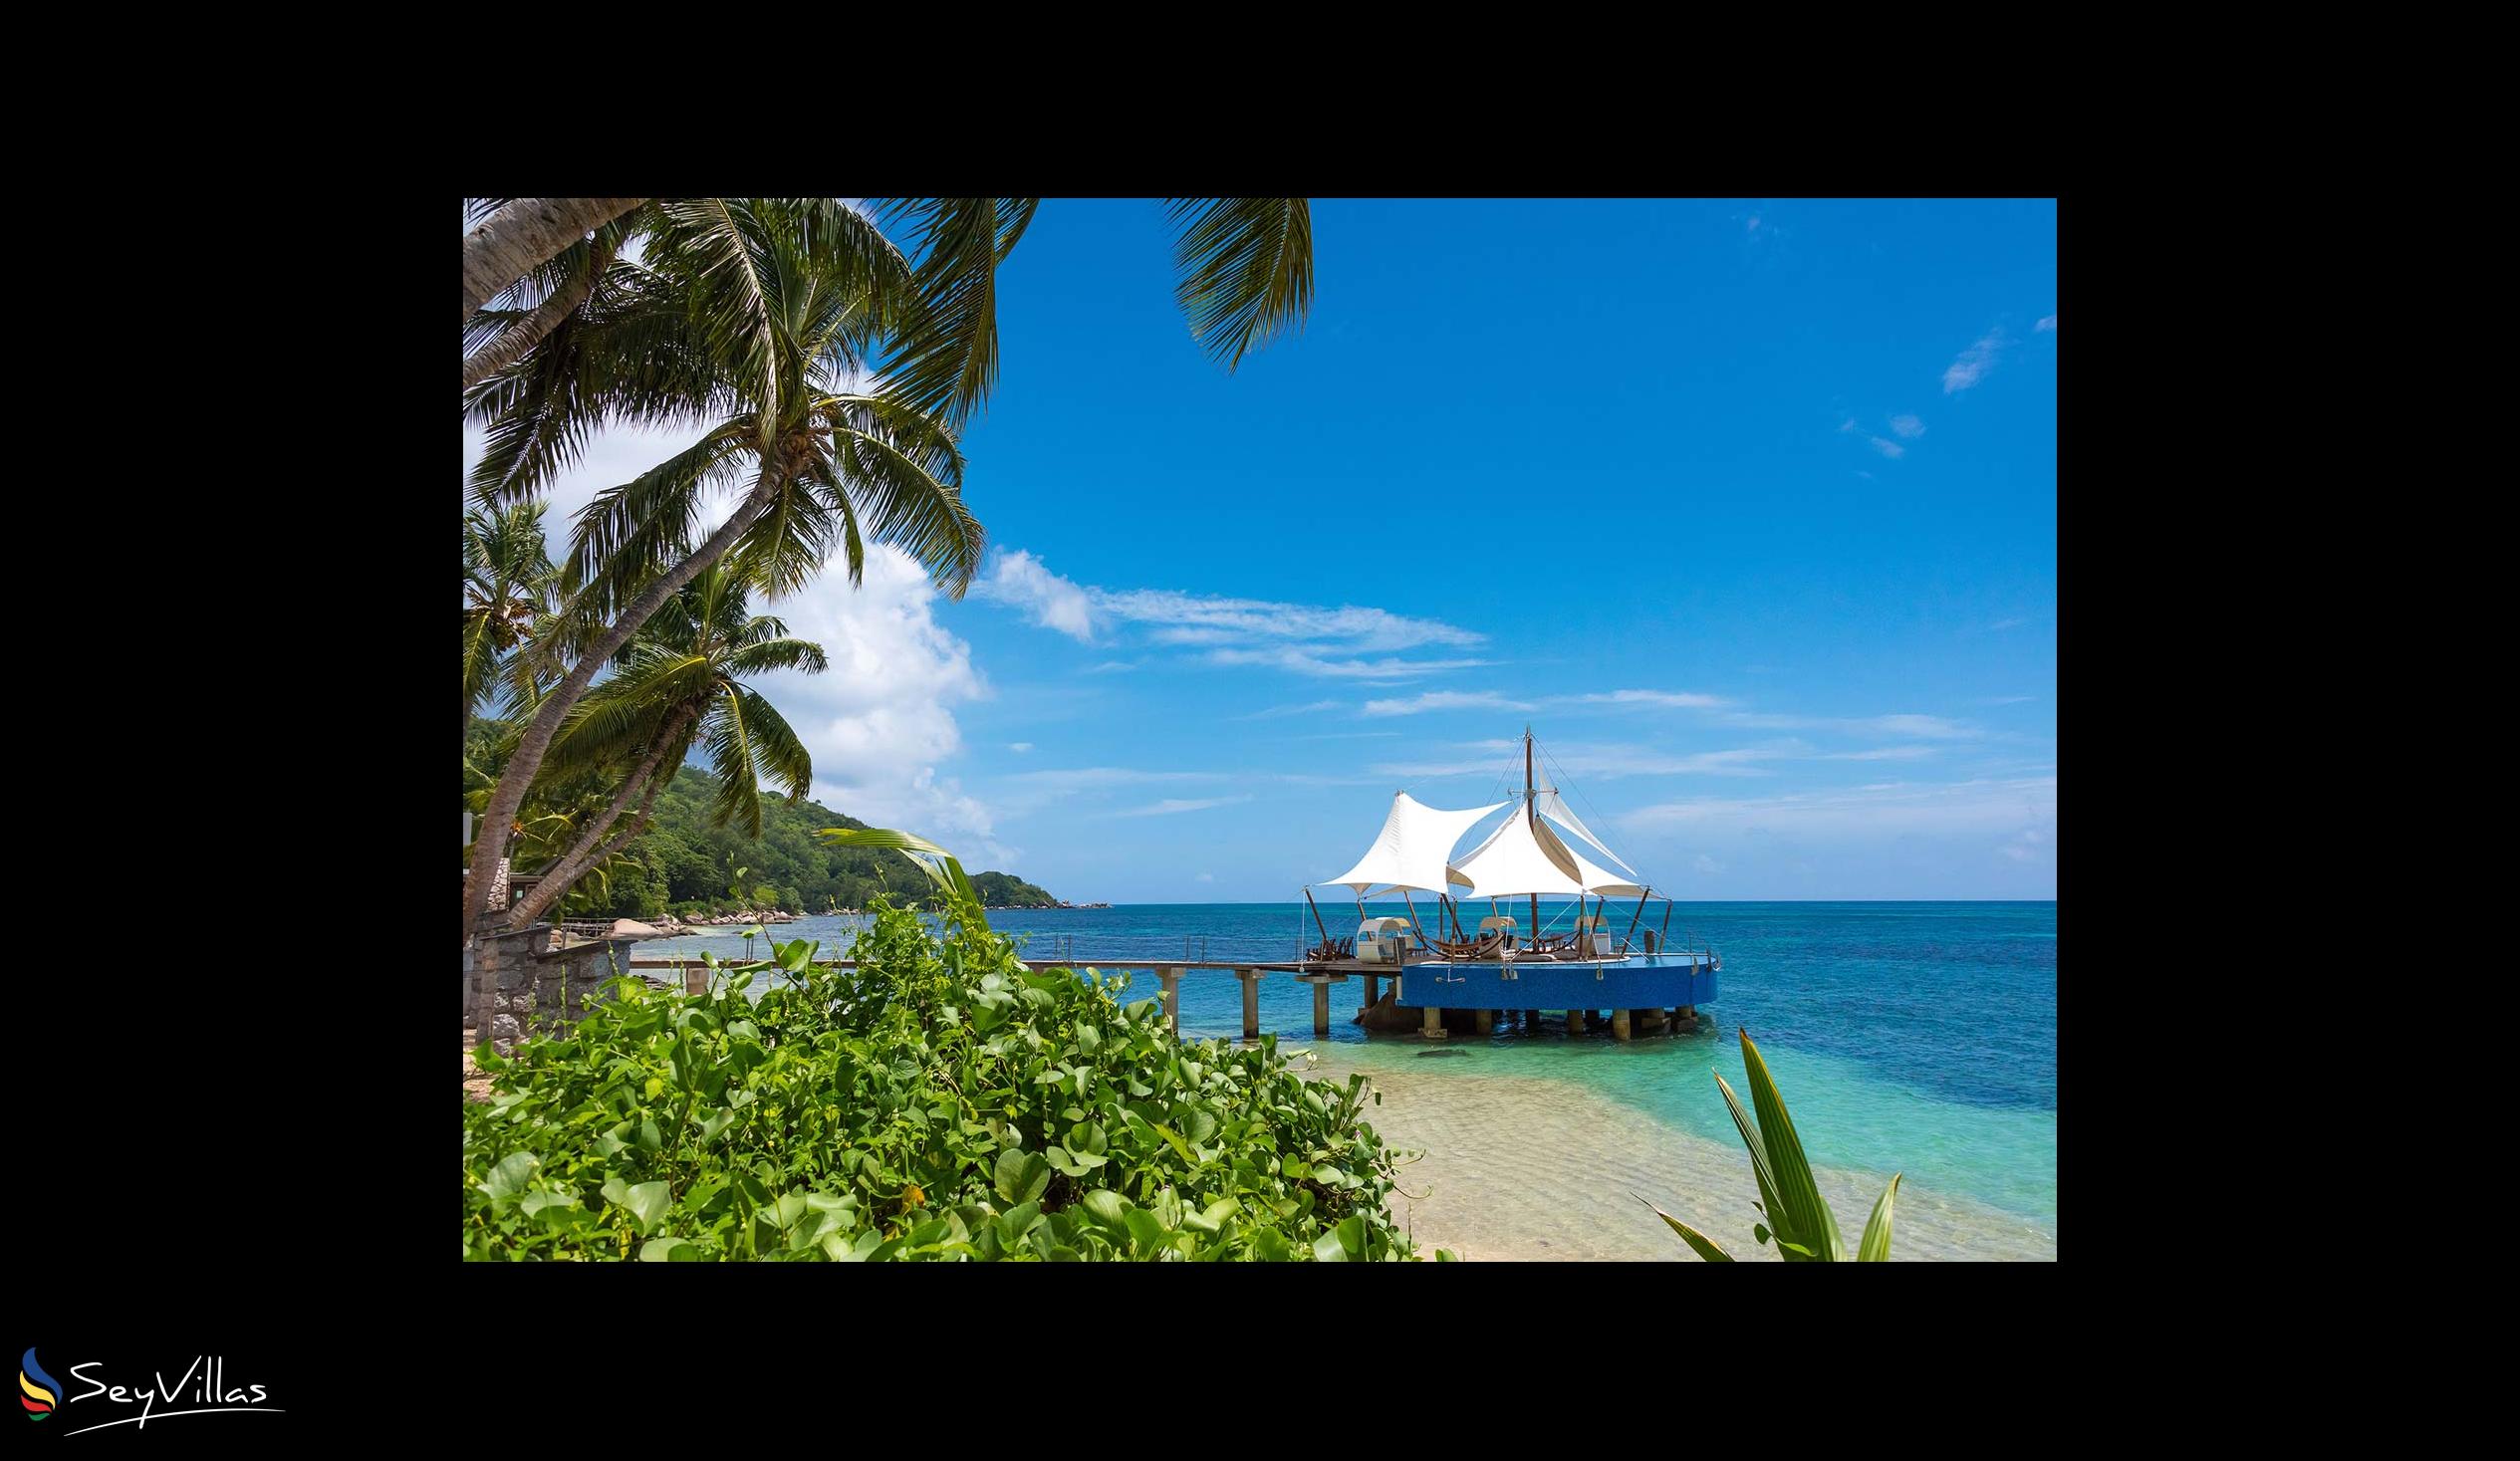 Photo 1: Coco de Mer & Black Parrot Suites - Outdoor area - Praslin (Seychelles)